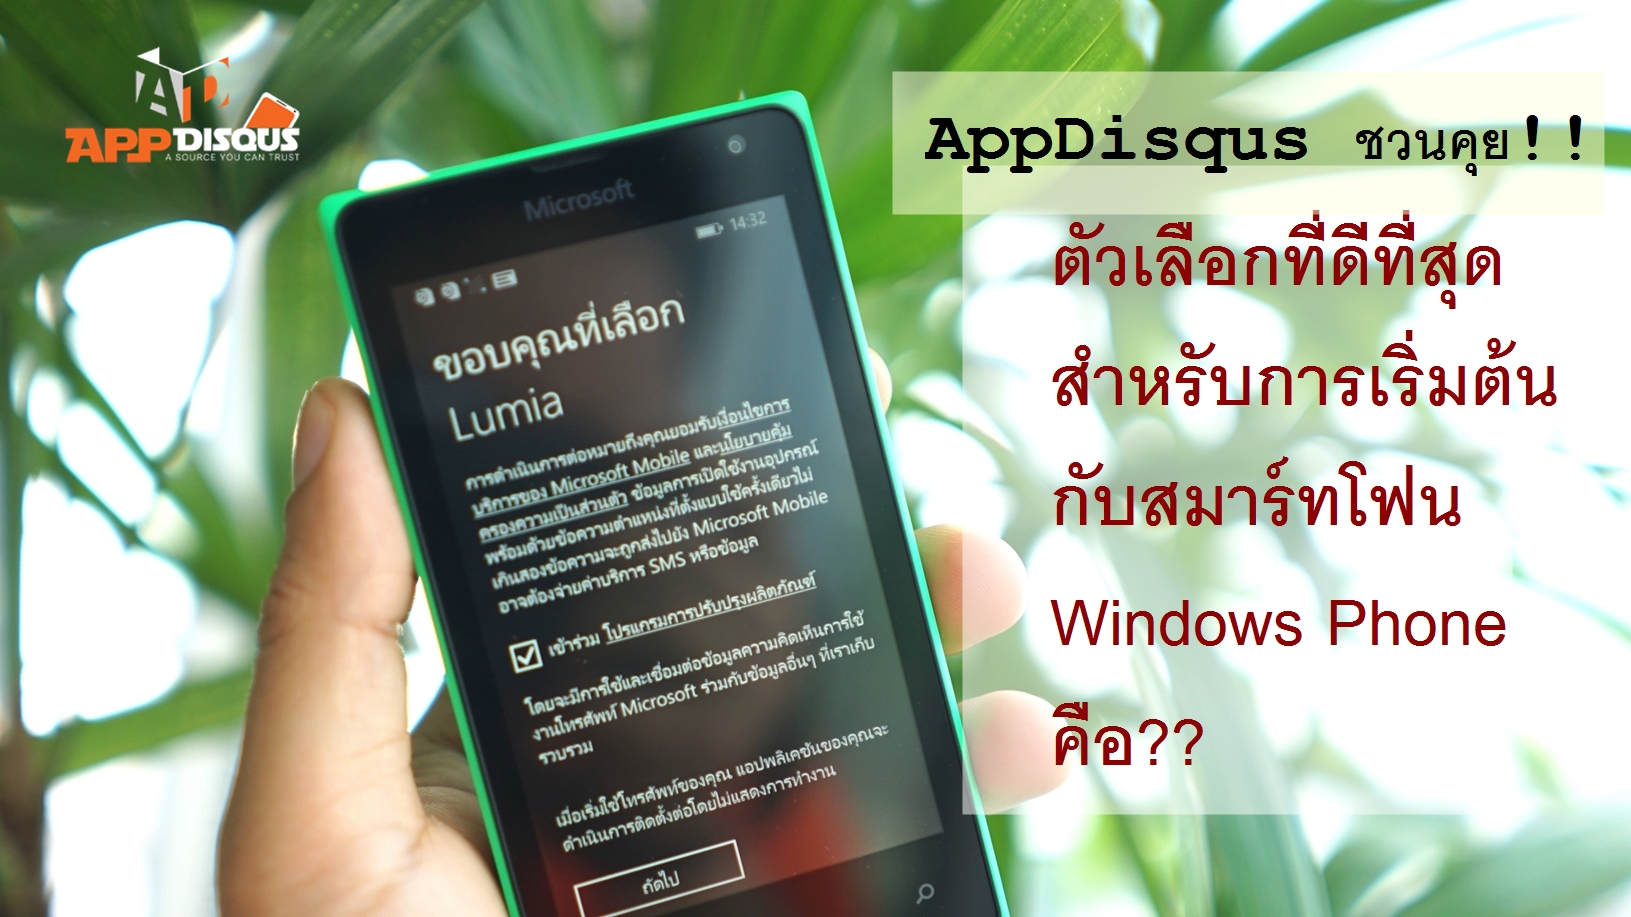 DSC01773 | AppDisqus ชวนคุย | [AppDisqus ชวนคุย] ตัวเลือกที่ดีที่สุดสำหรับการเริ่มต้นกับสมาร์ทโฟน Windows Phone คือ?? และทำไมต้องเป็น Windows Phone ?